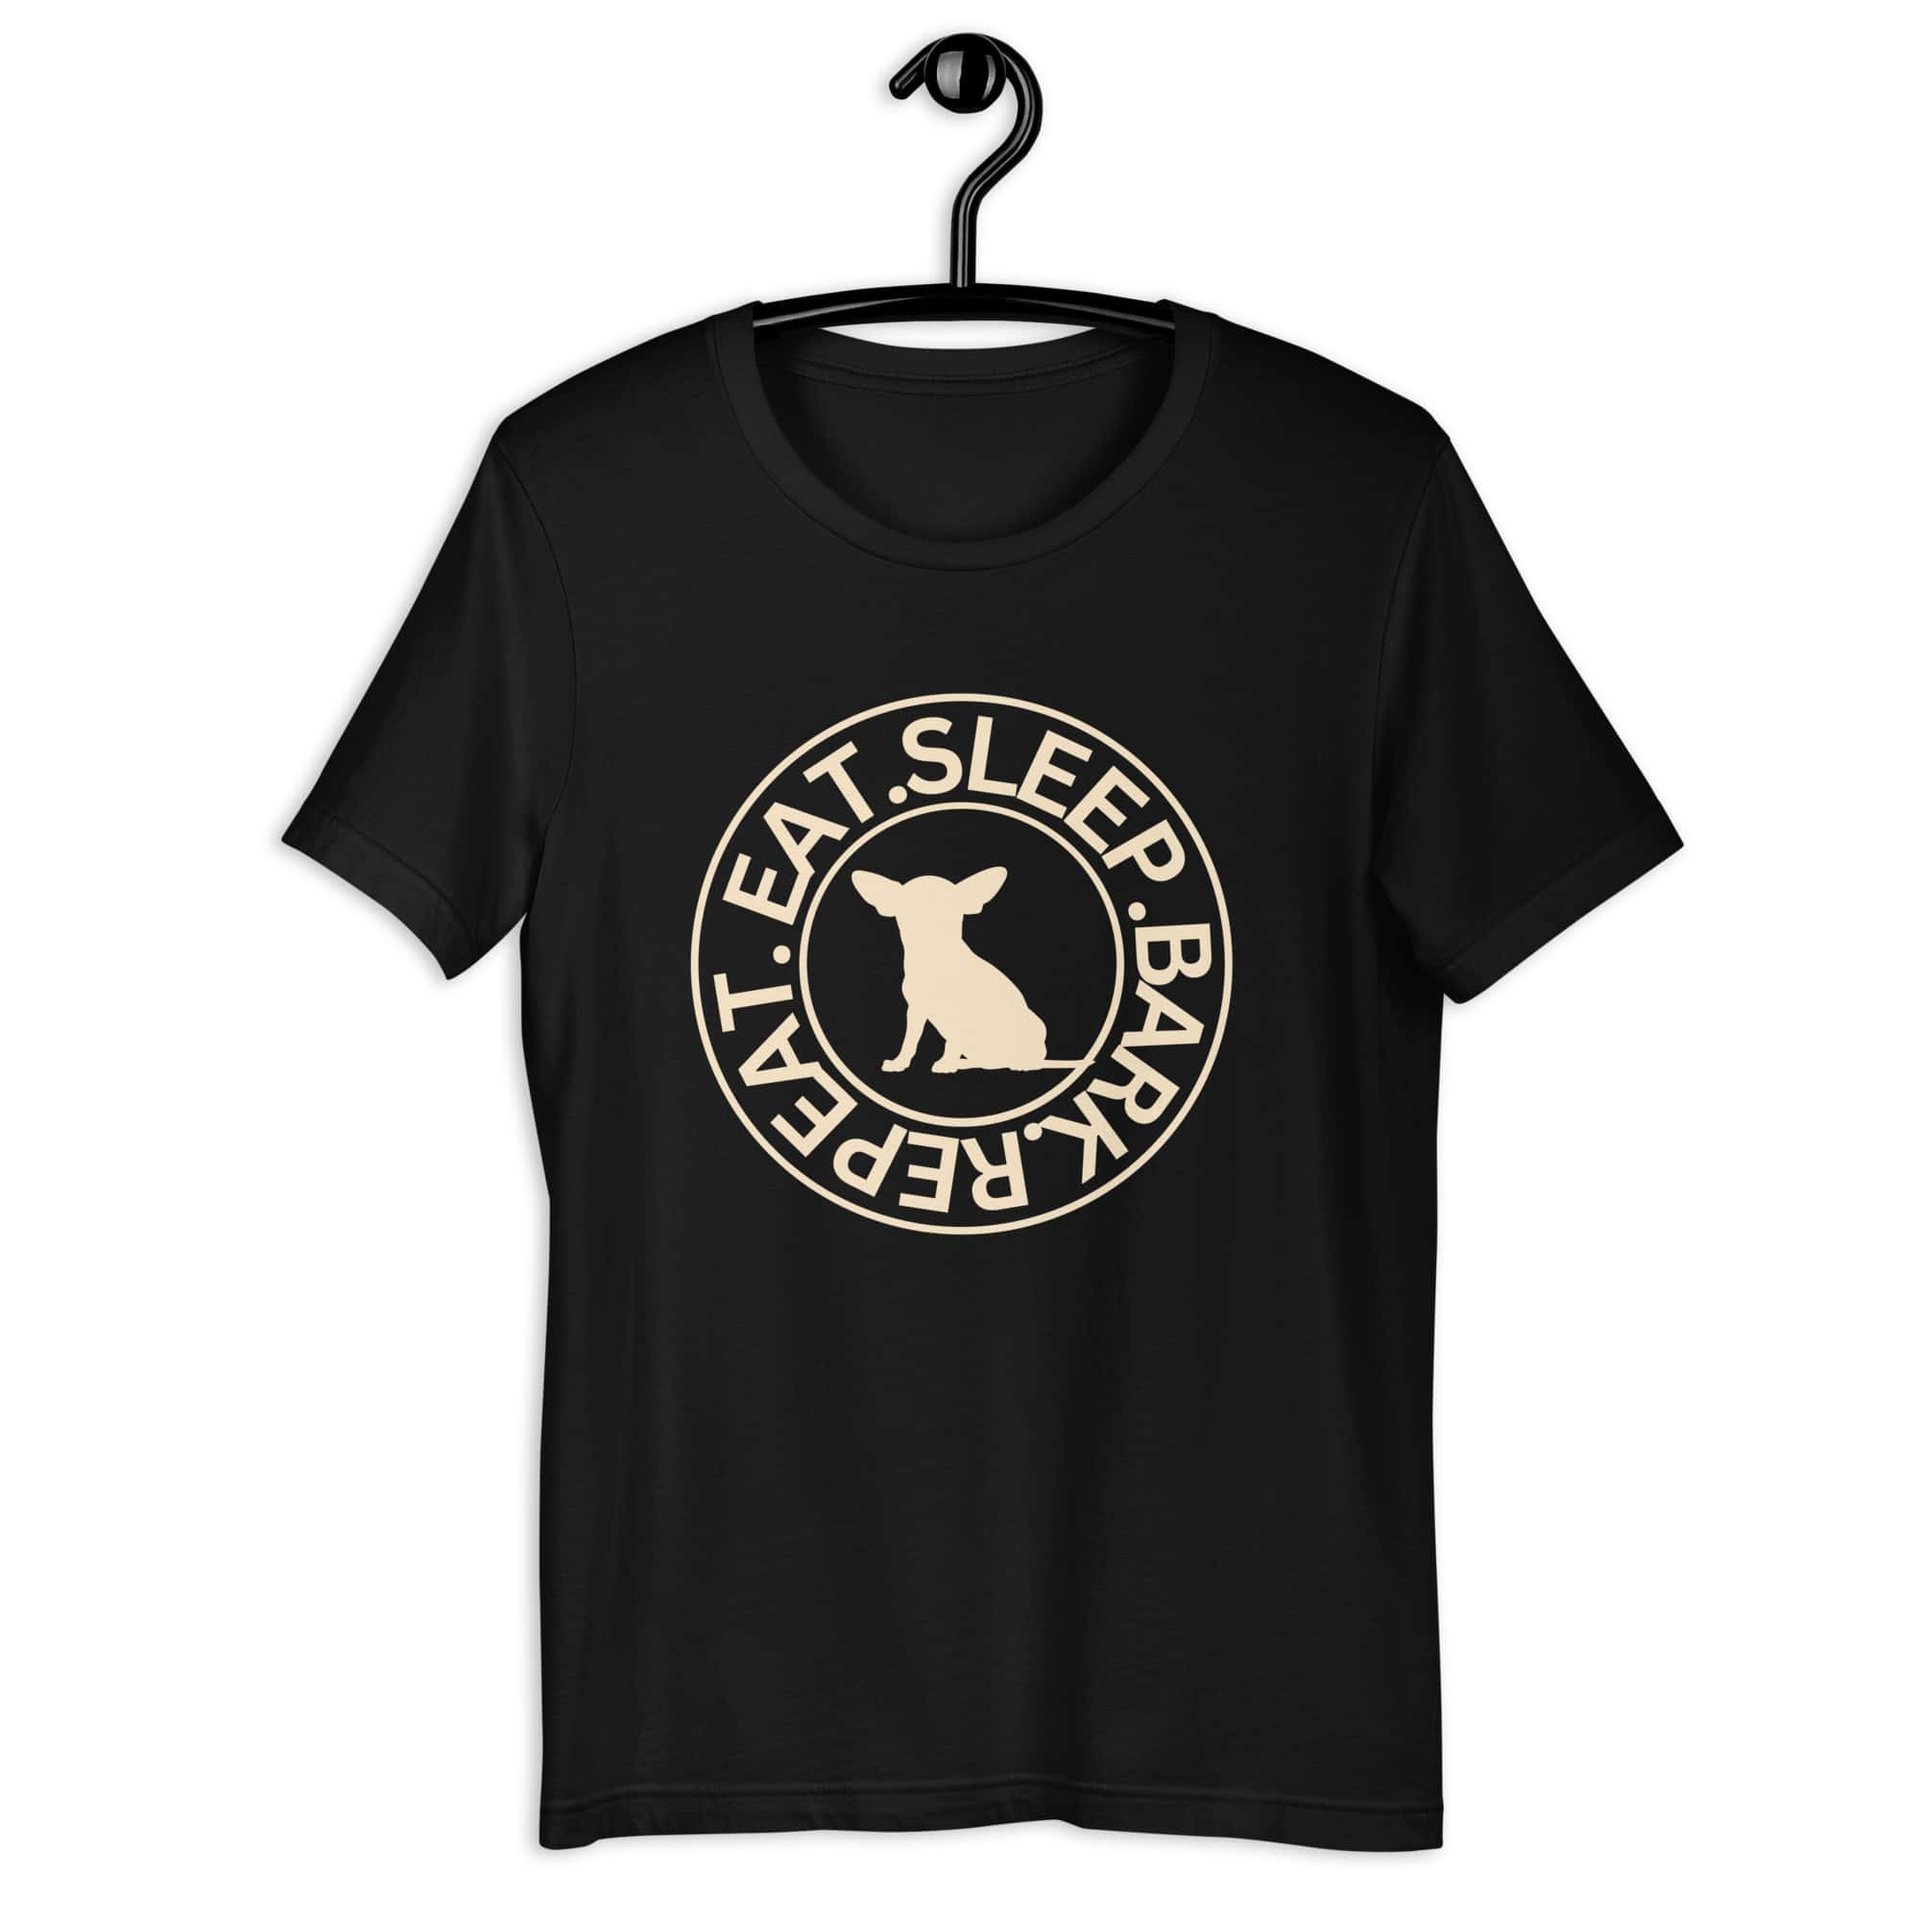 Eat Sleep Bark Repeat Chihuahua Unisex T-Shirt. Black